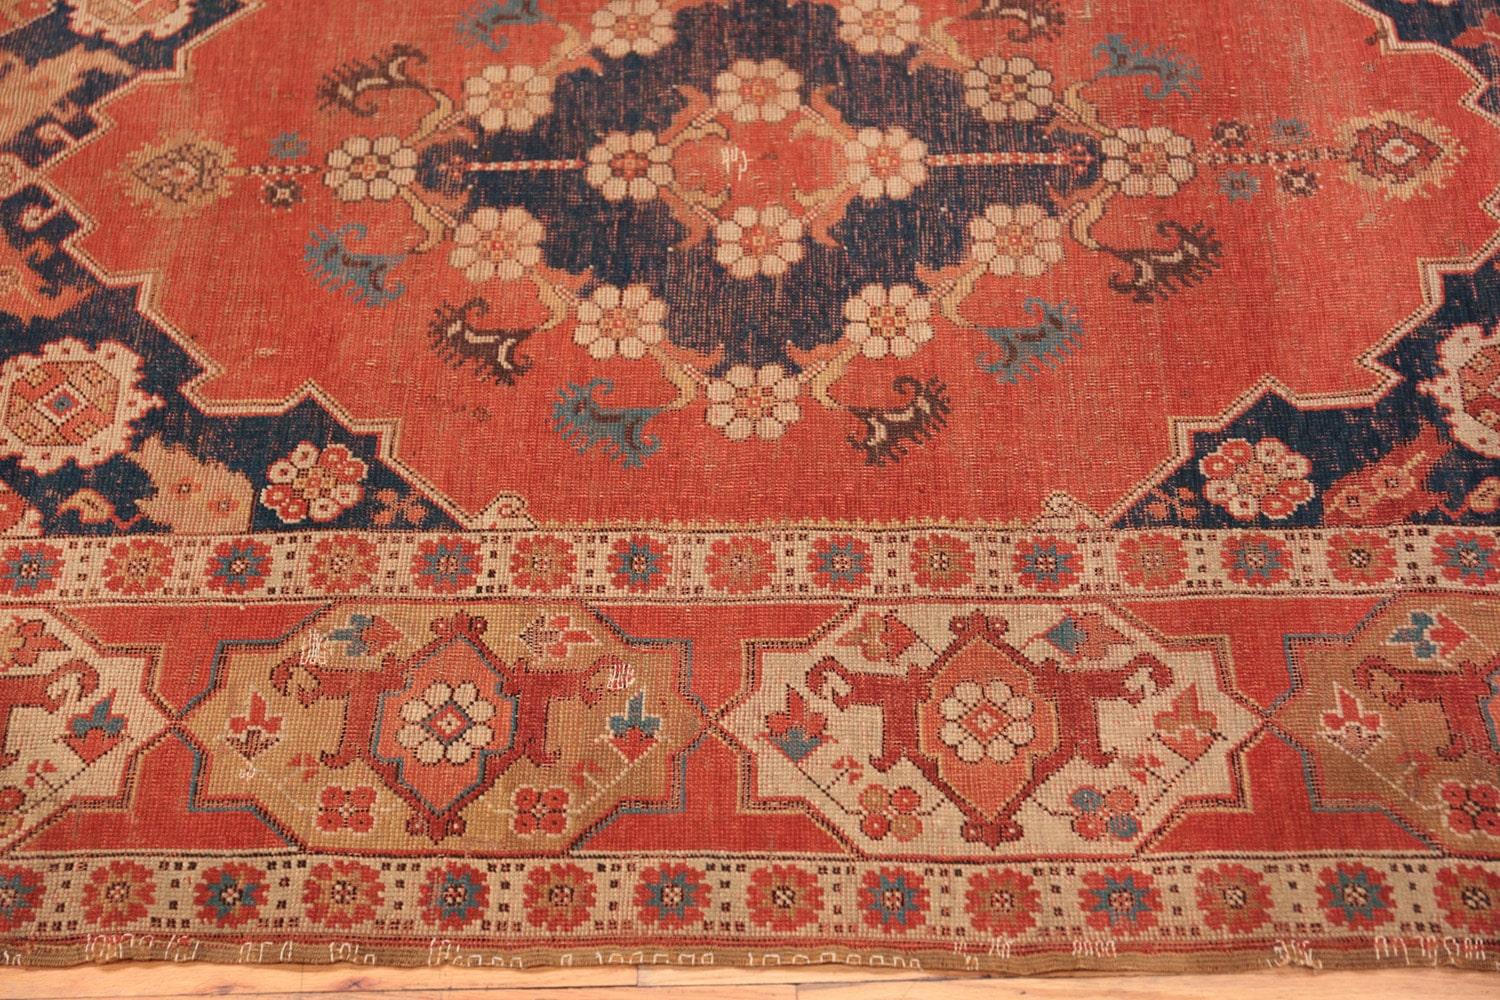 Magnificent antique 17th century Transylvanian rug, country of origin: Romania (Ottoman Empire), date circa second half of 17th century - Size: 4 ft 2 in x 5 ft 9 in (1.27 m x 1.75 m).